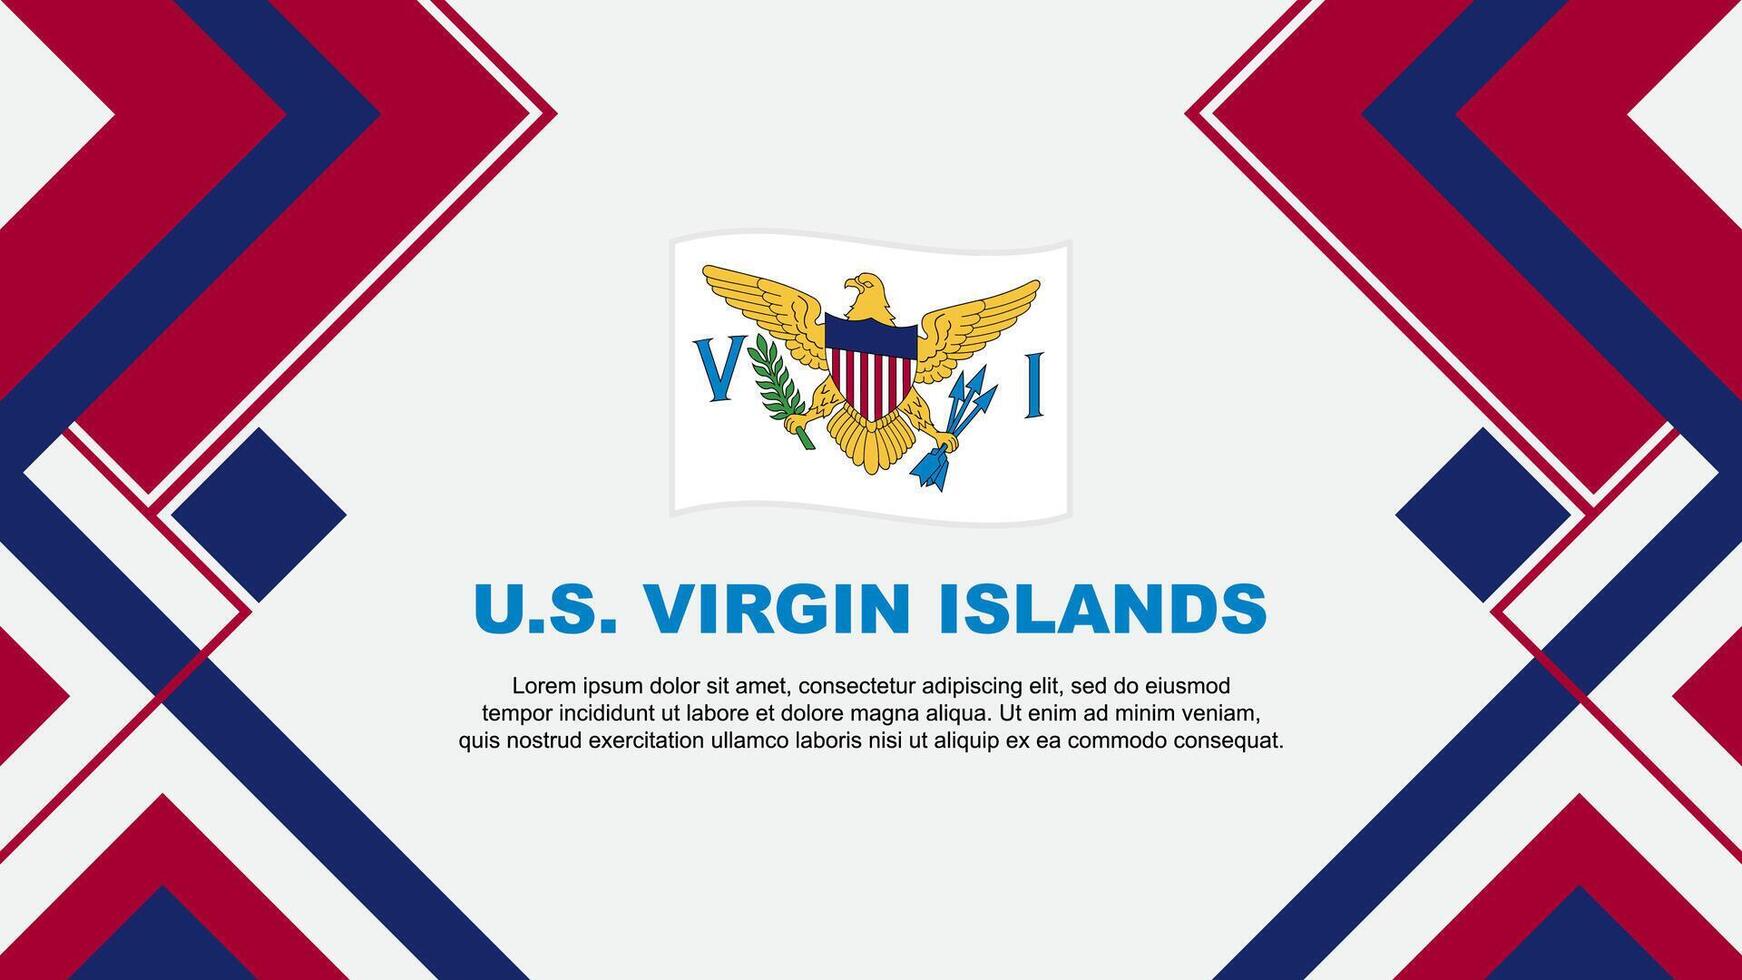 U.S. Virgin Islands Flag Abstract Background Design Template. U.S. Virgin Islands Independence Day Banner Wallpaper Vector Illustration. U.S. Virgin Islands Banner